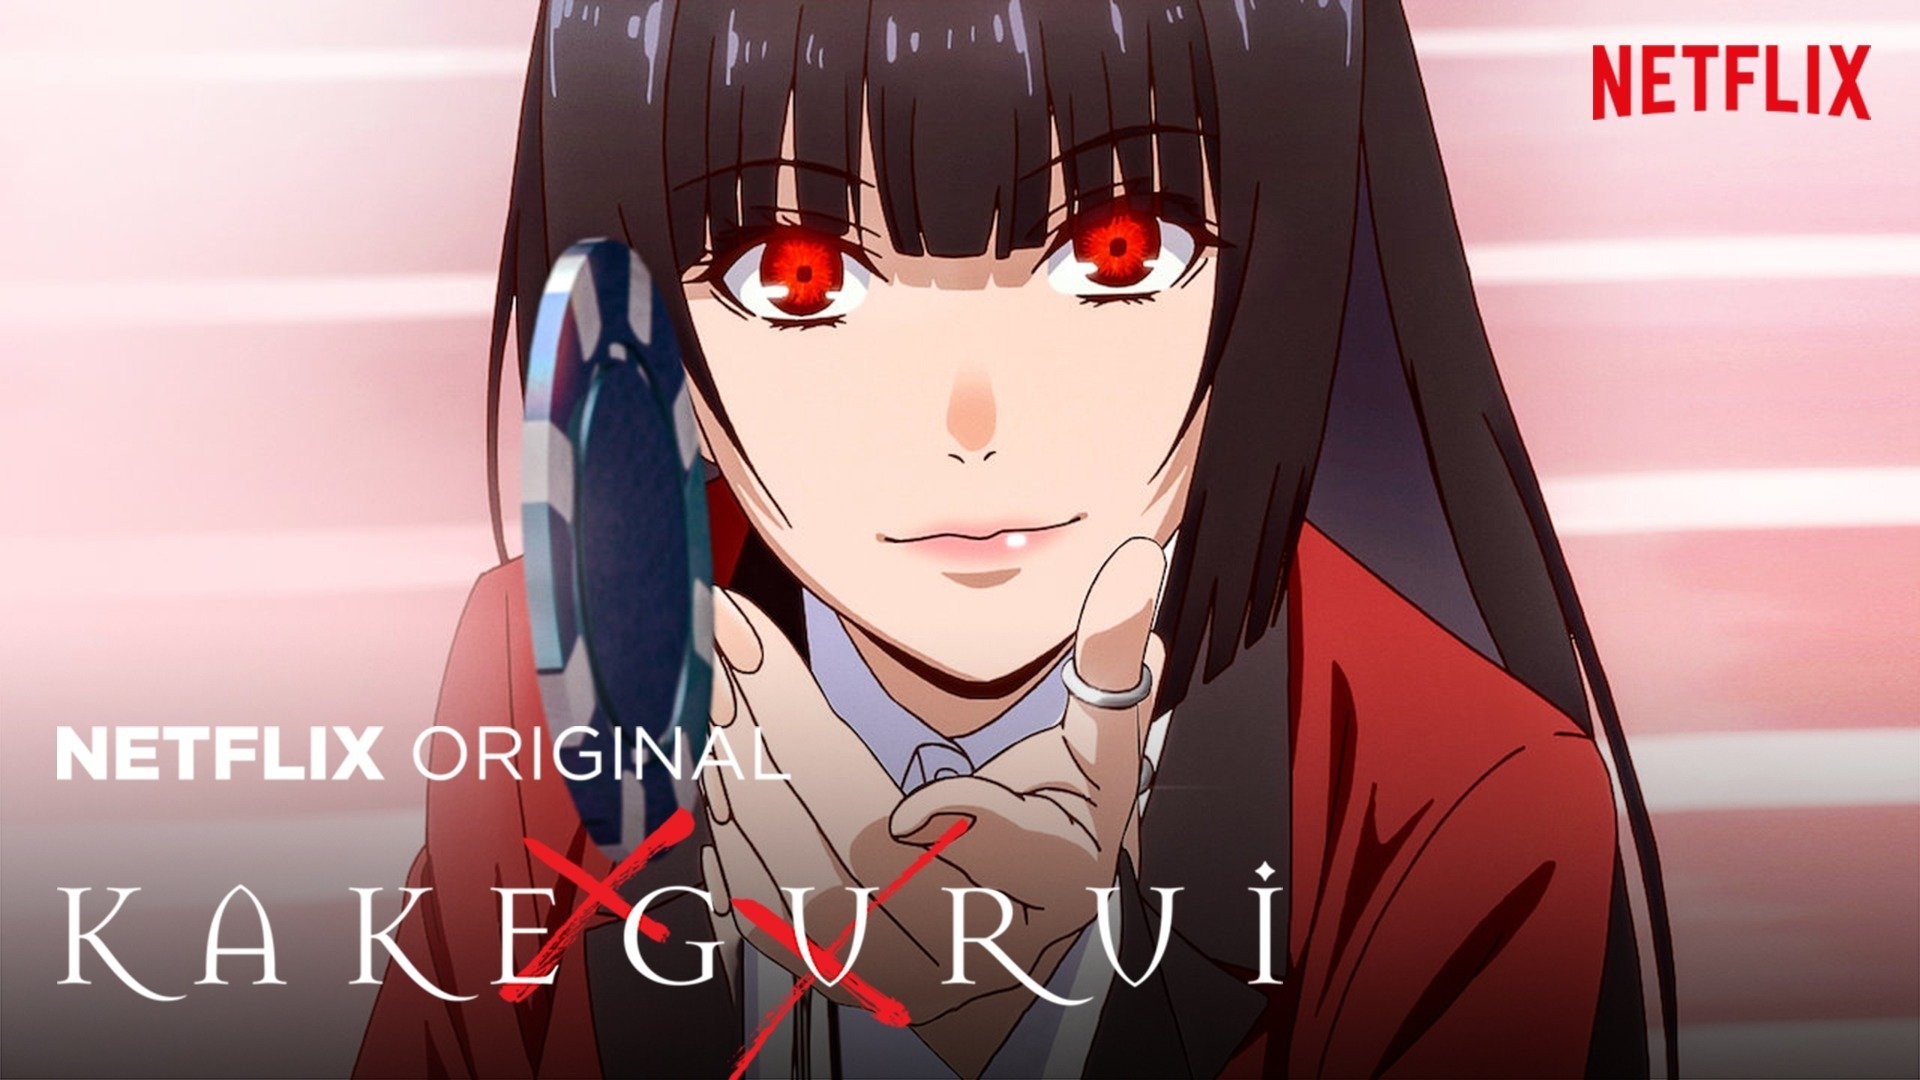 Qoo News] Anime Kakegurui has a second season in production